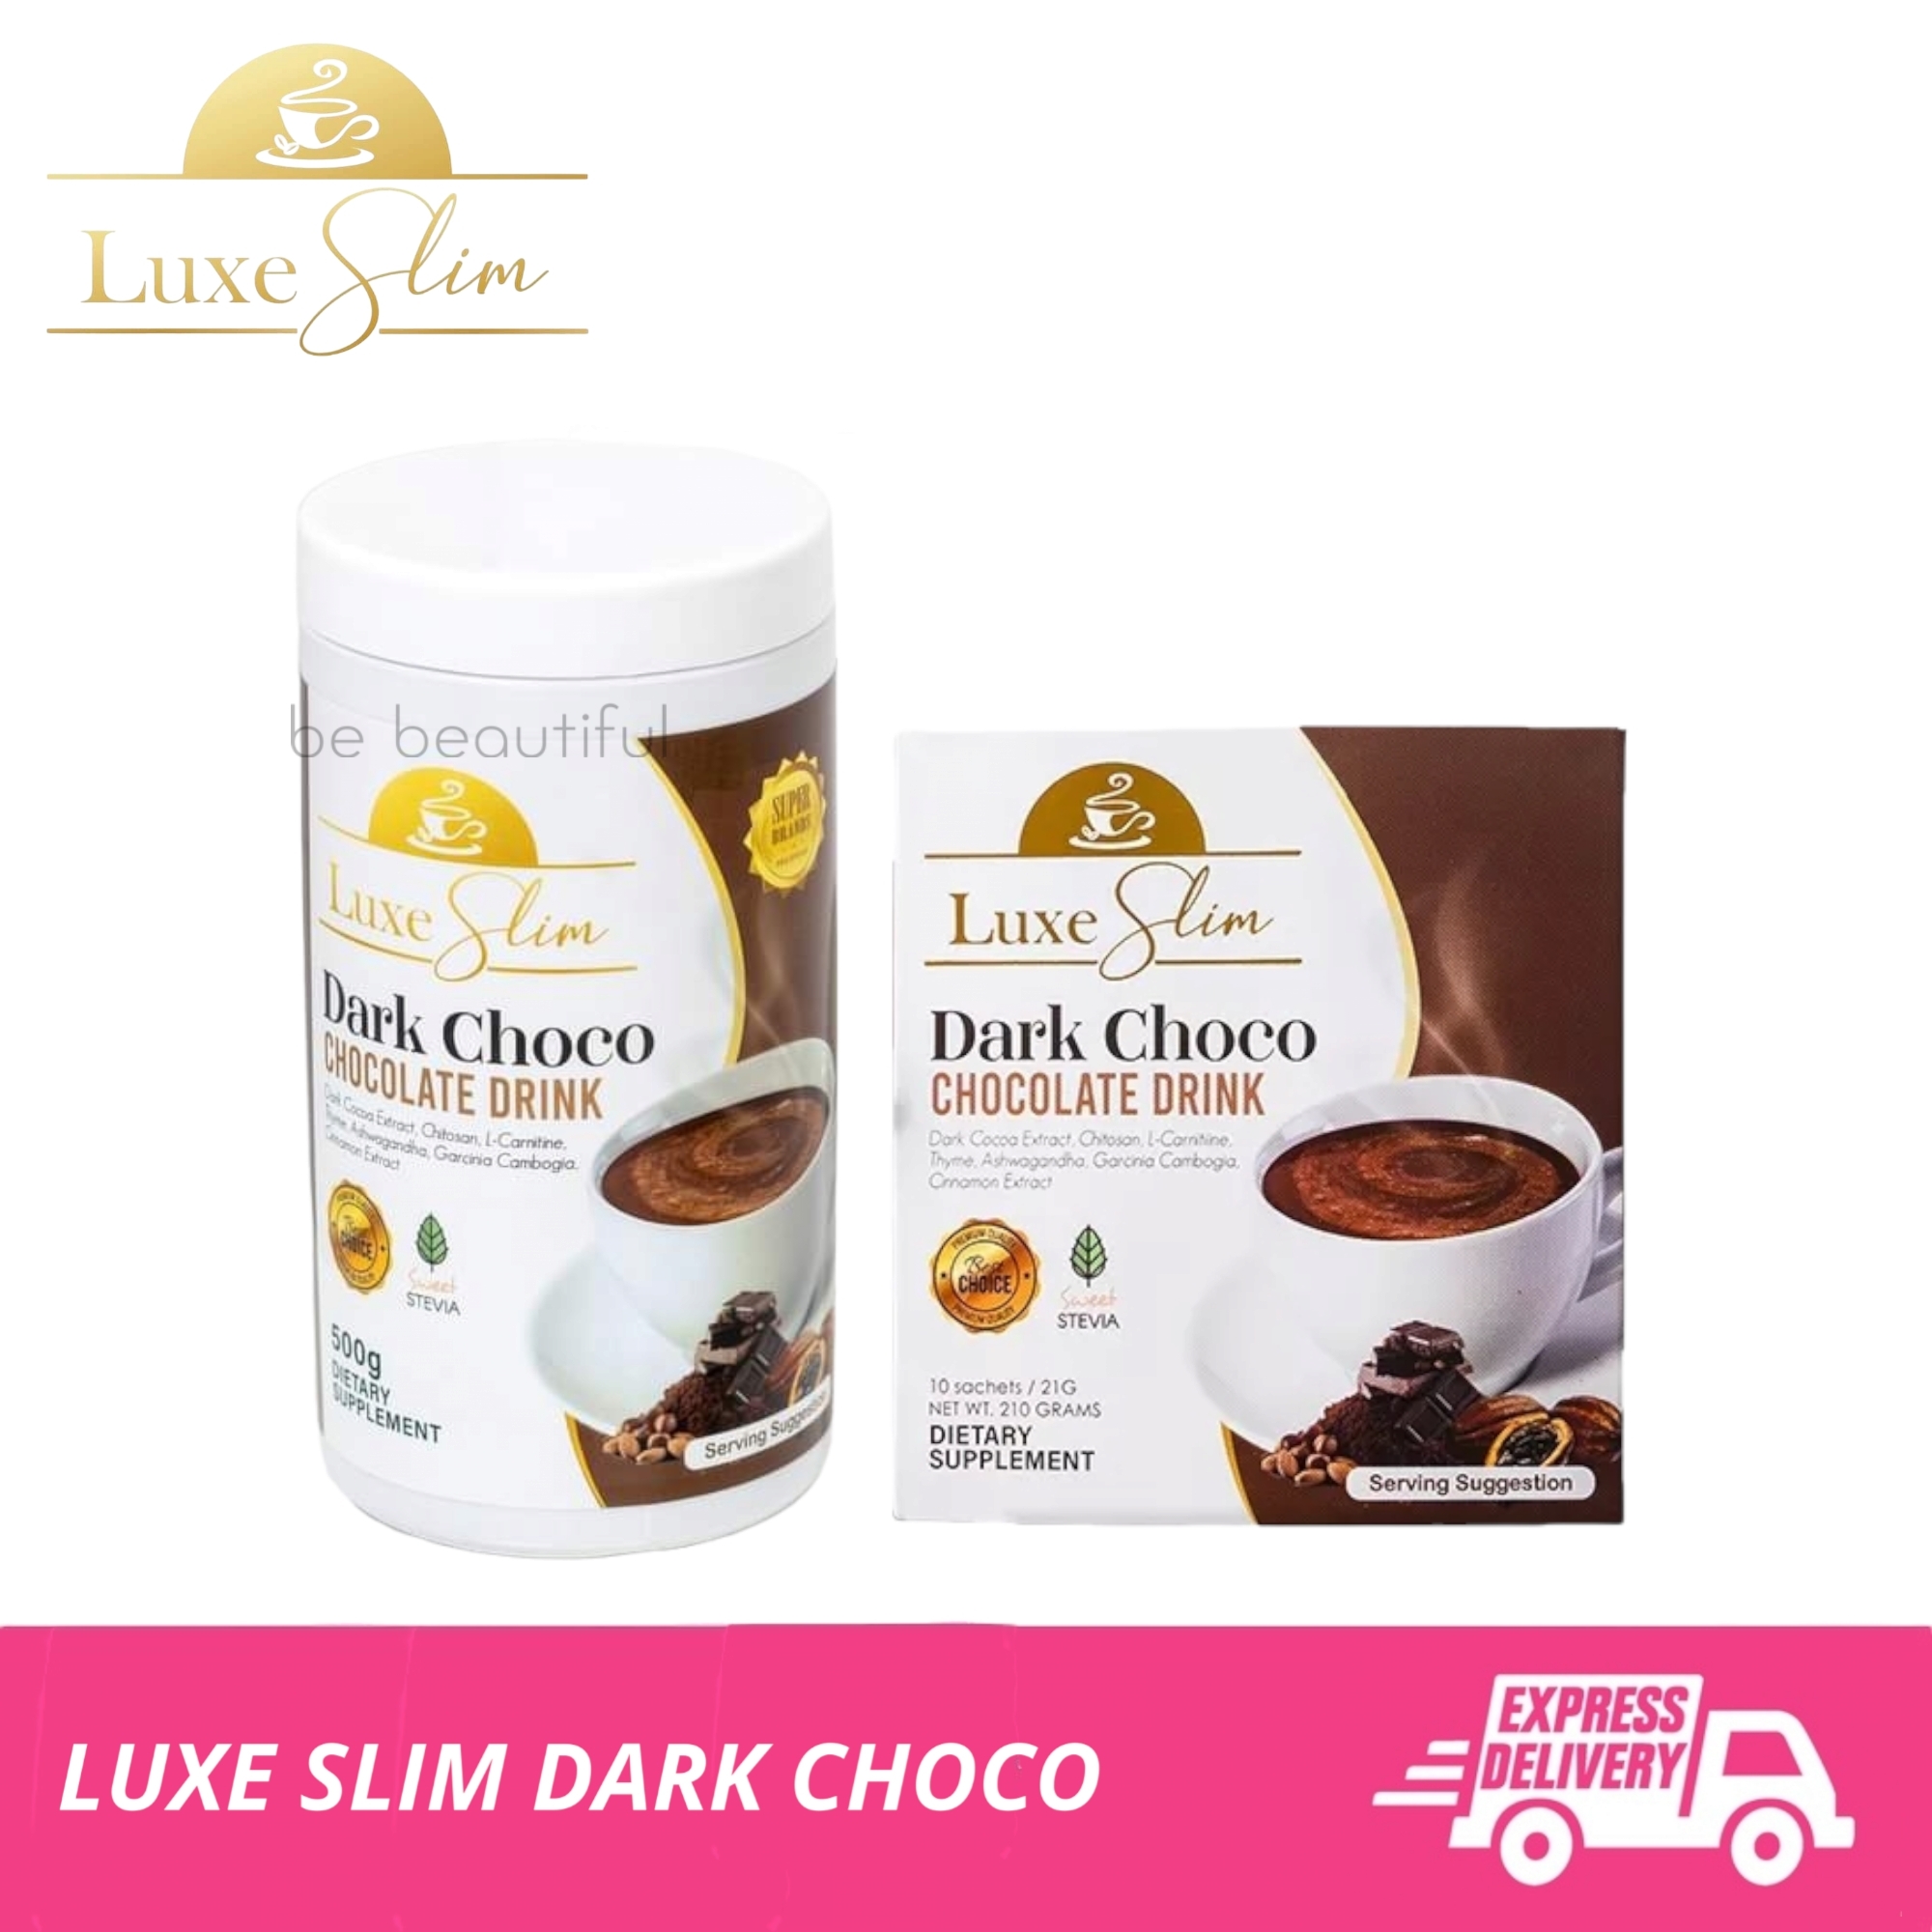 Luxe Slim Dark Choco Half kilo